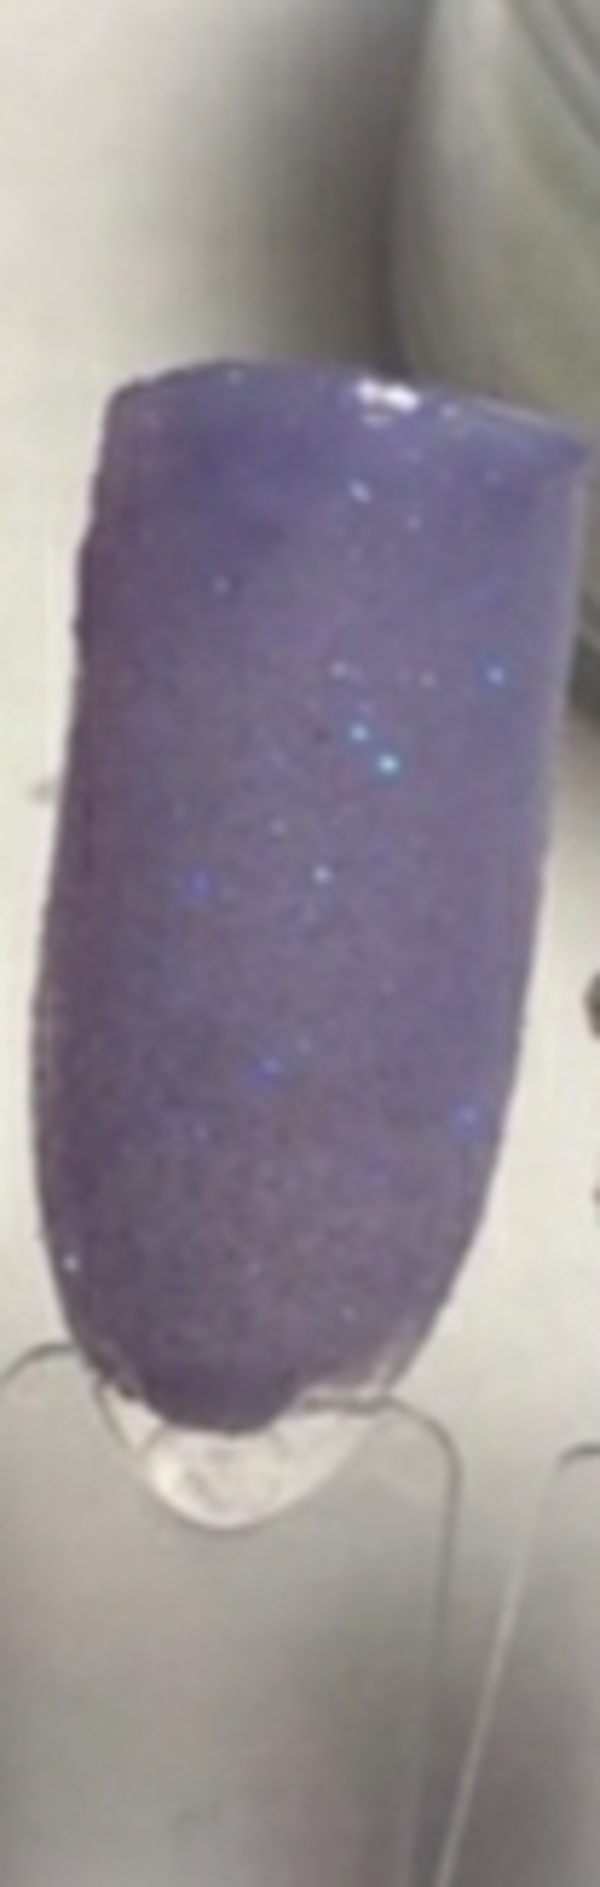 Nail polish swatch / manicure of shade Revel Grape